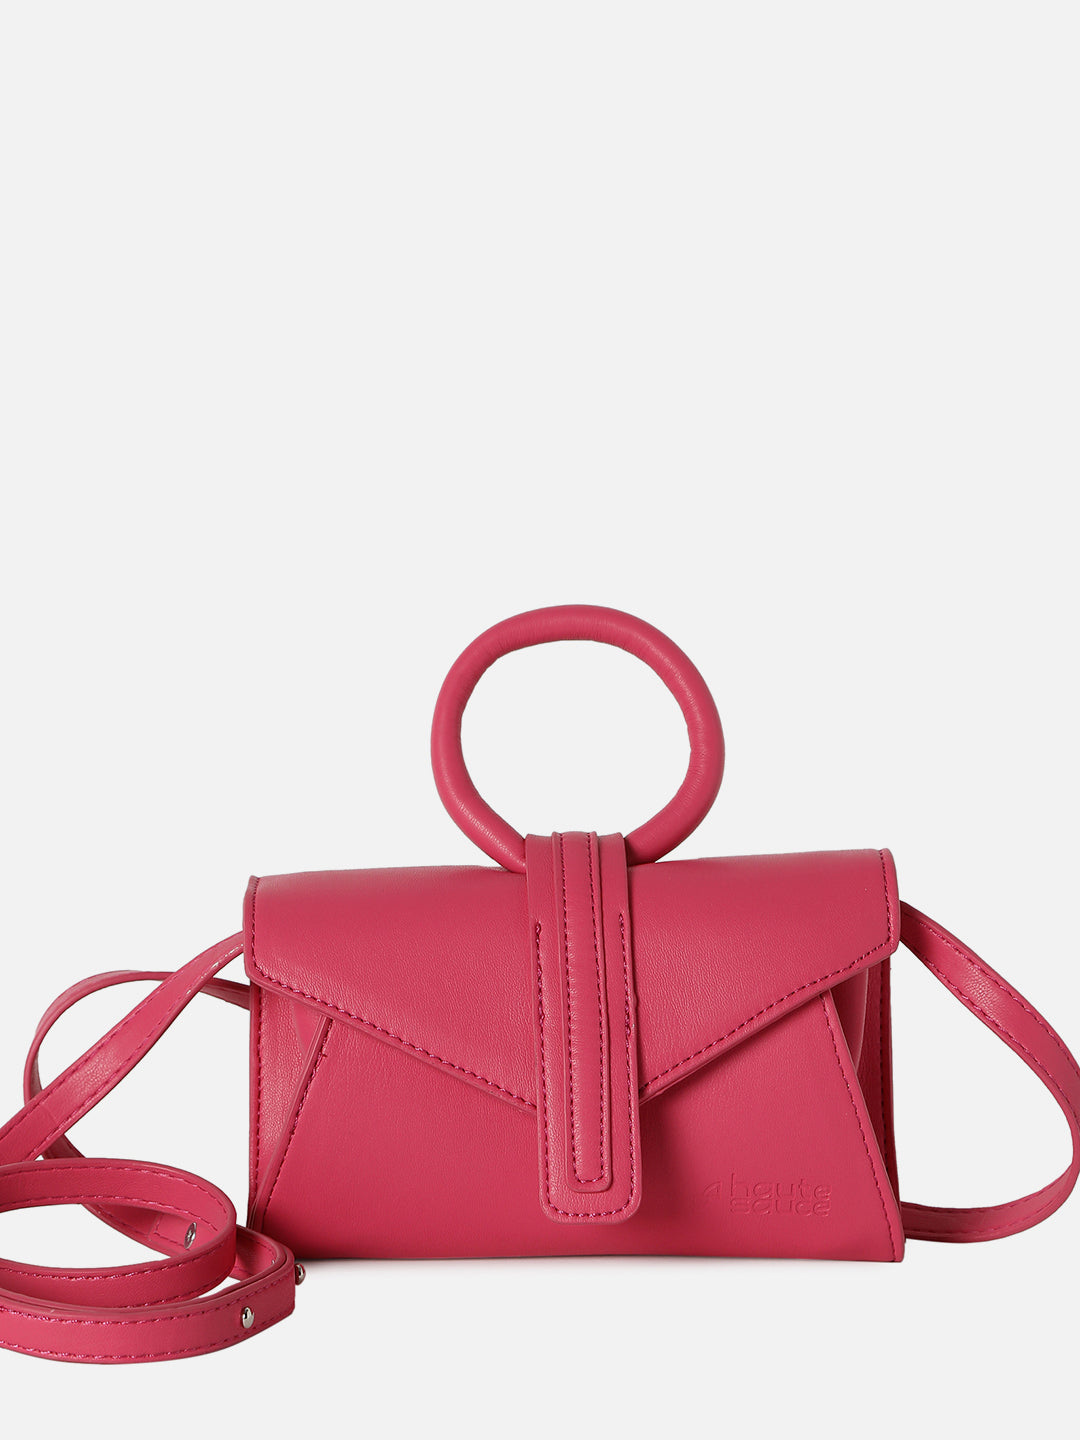 Rosetta Pink Mini Bag